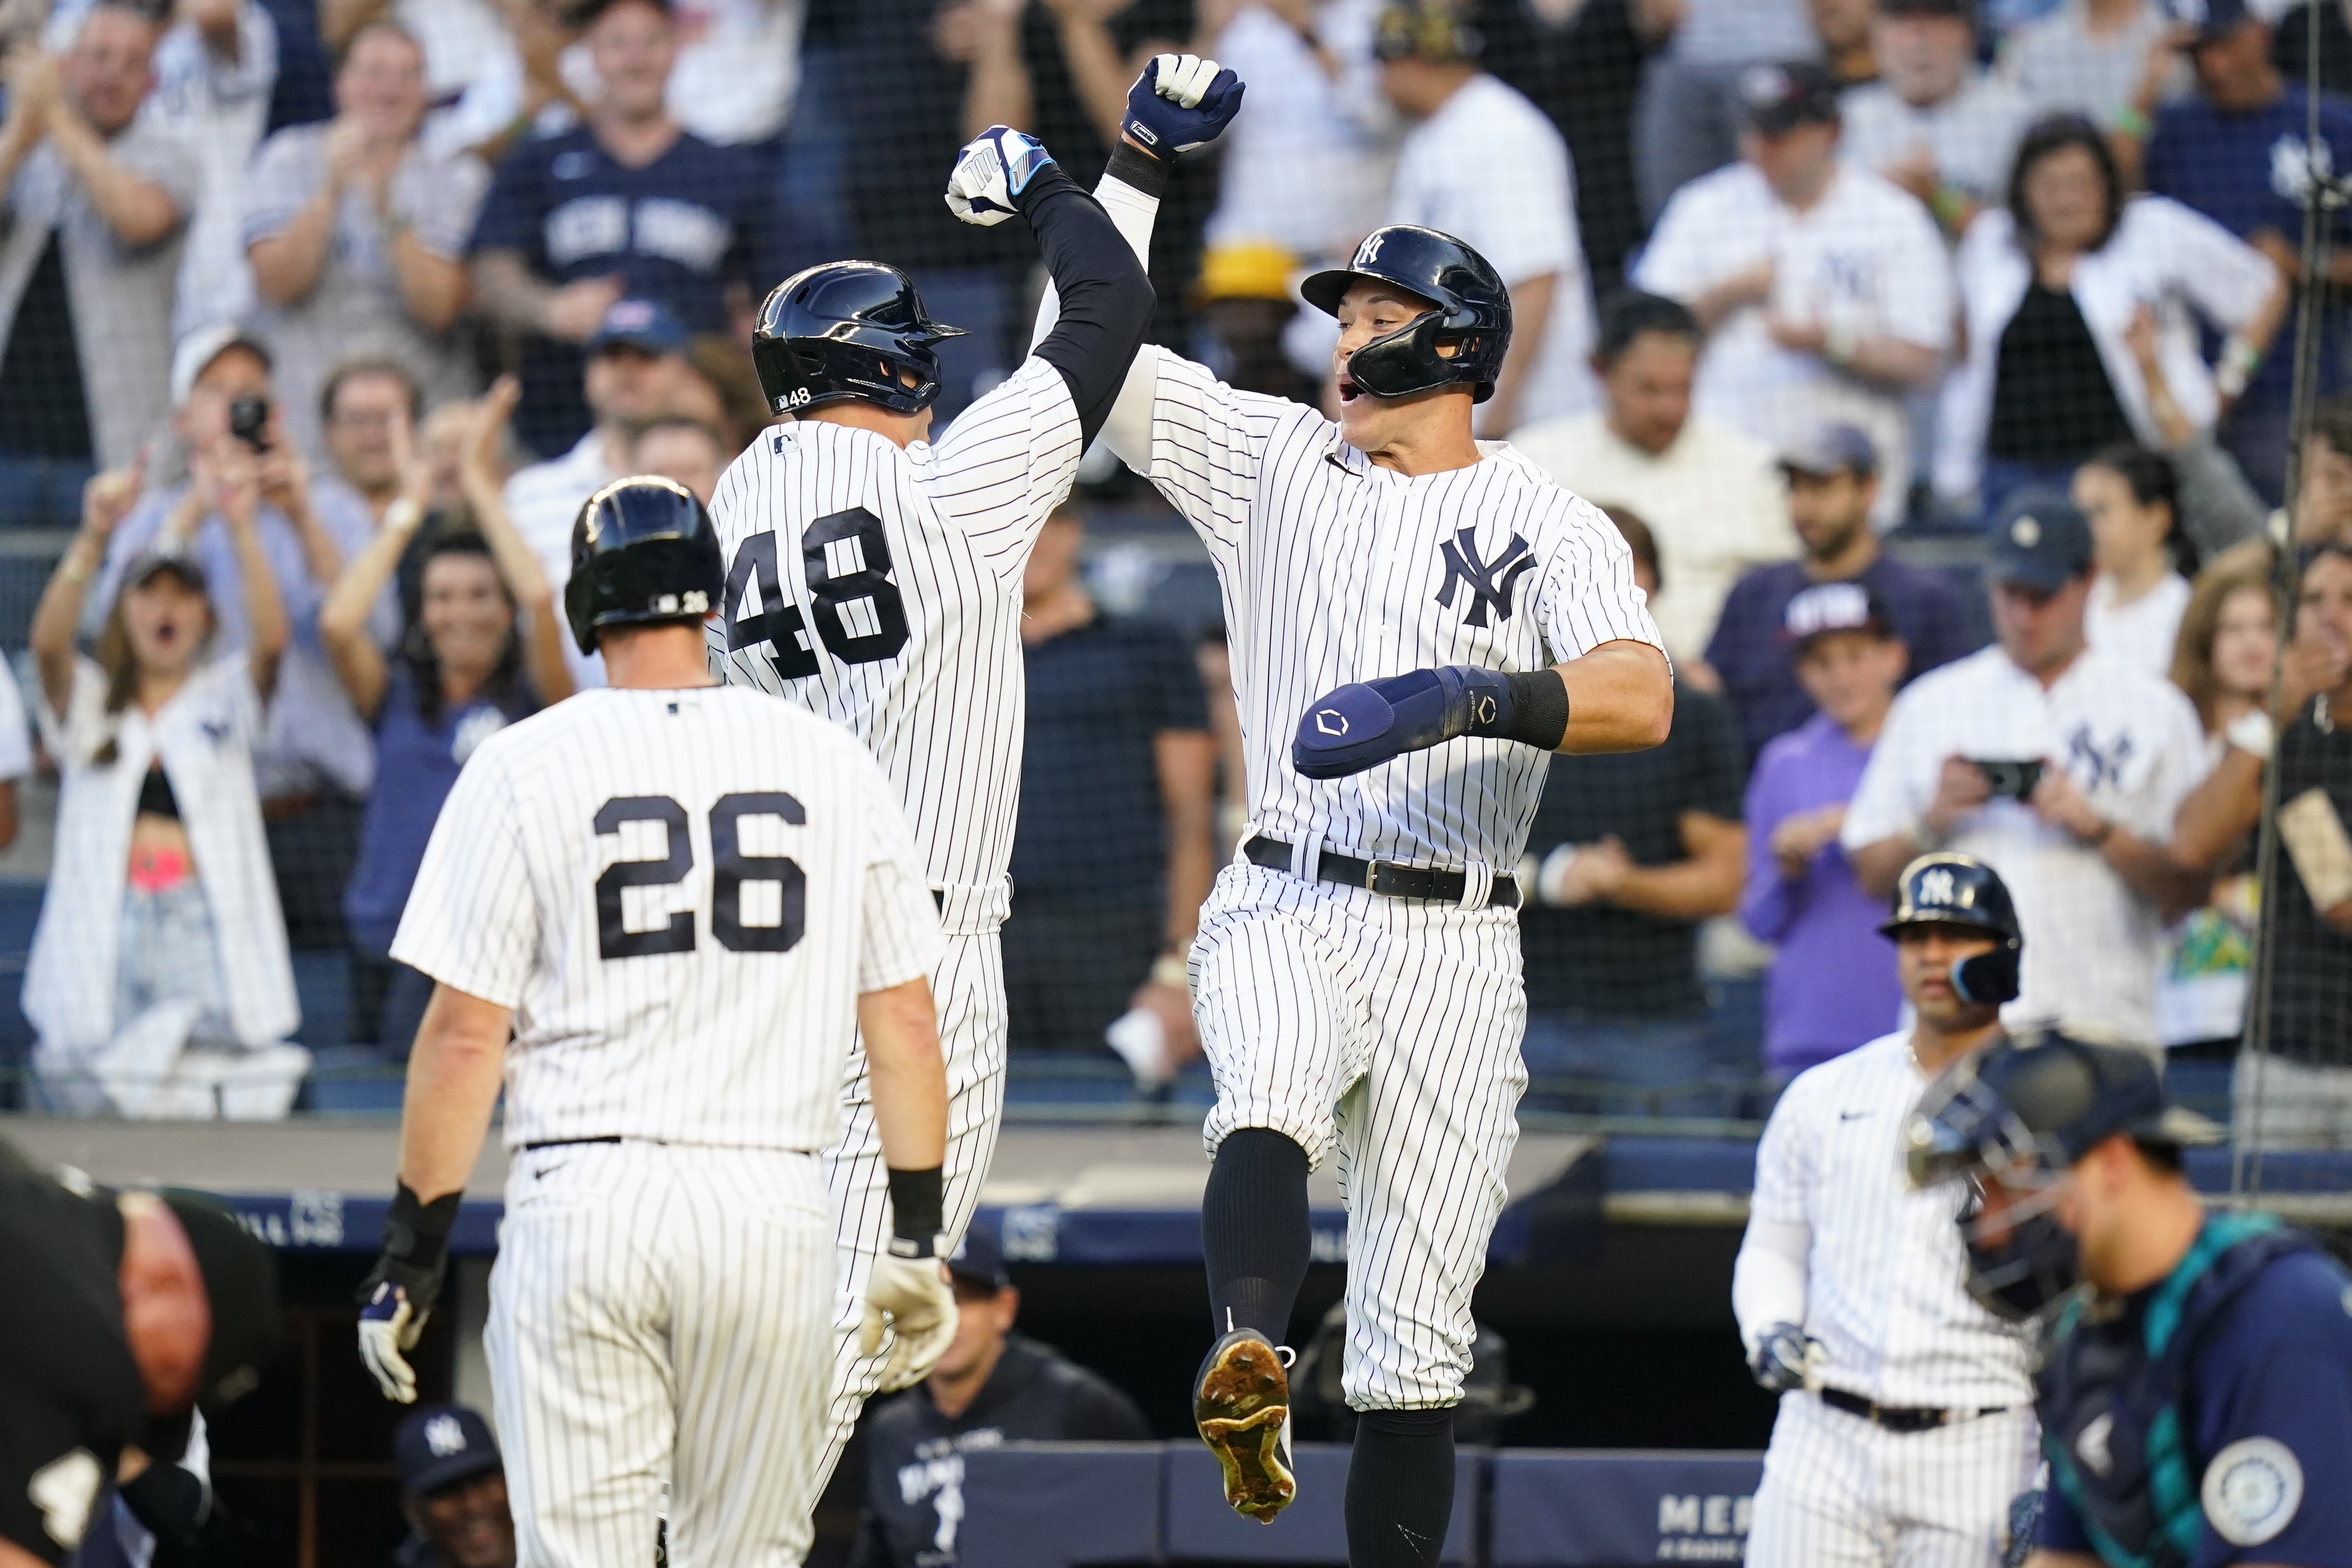 inks deal to stream New York Yankees baseball games on Prime Video –  GeekWire